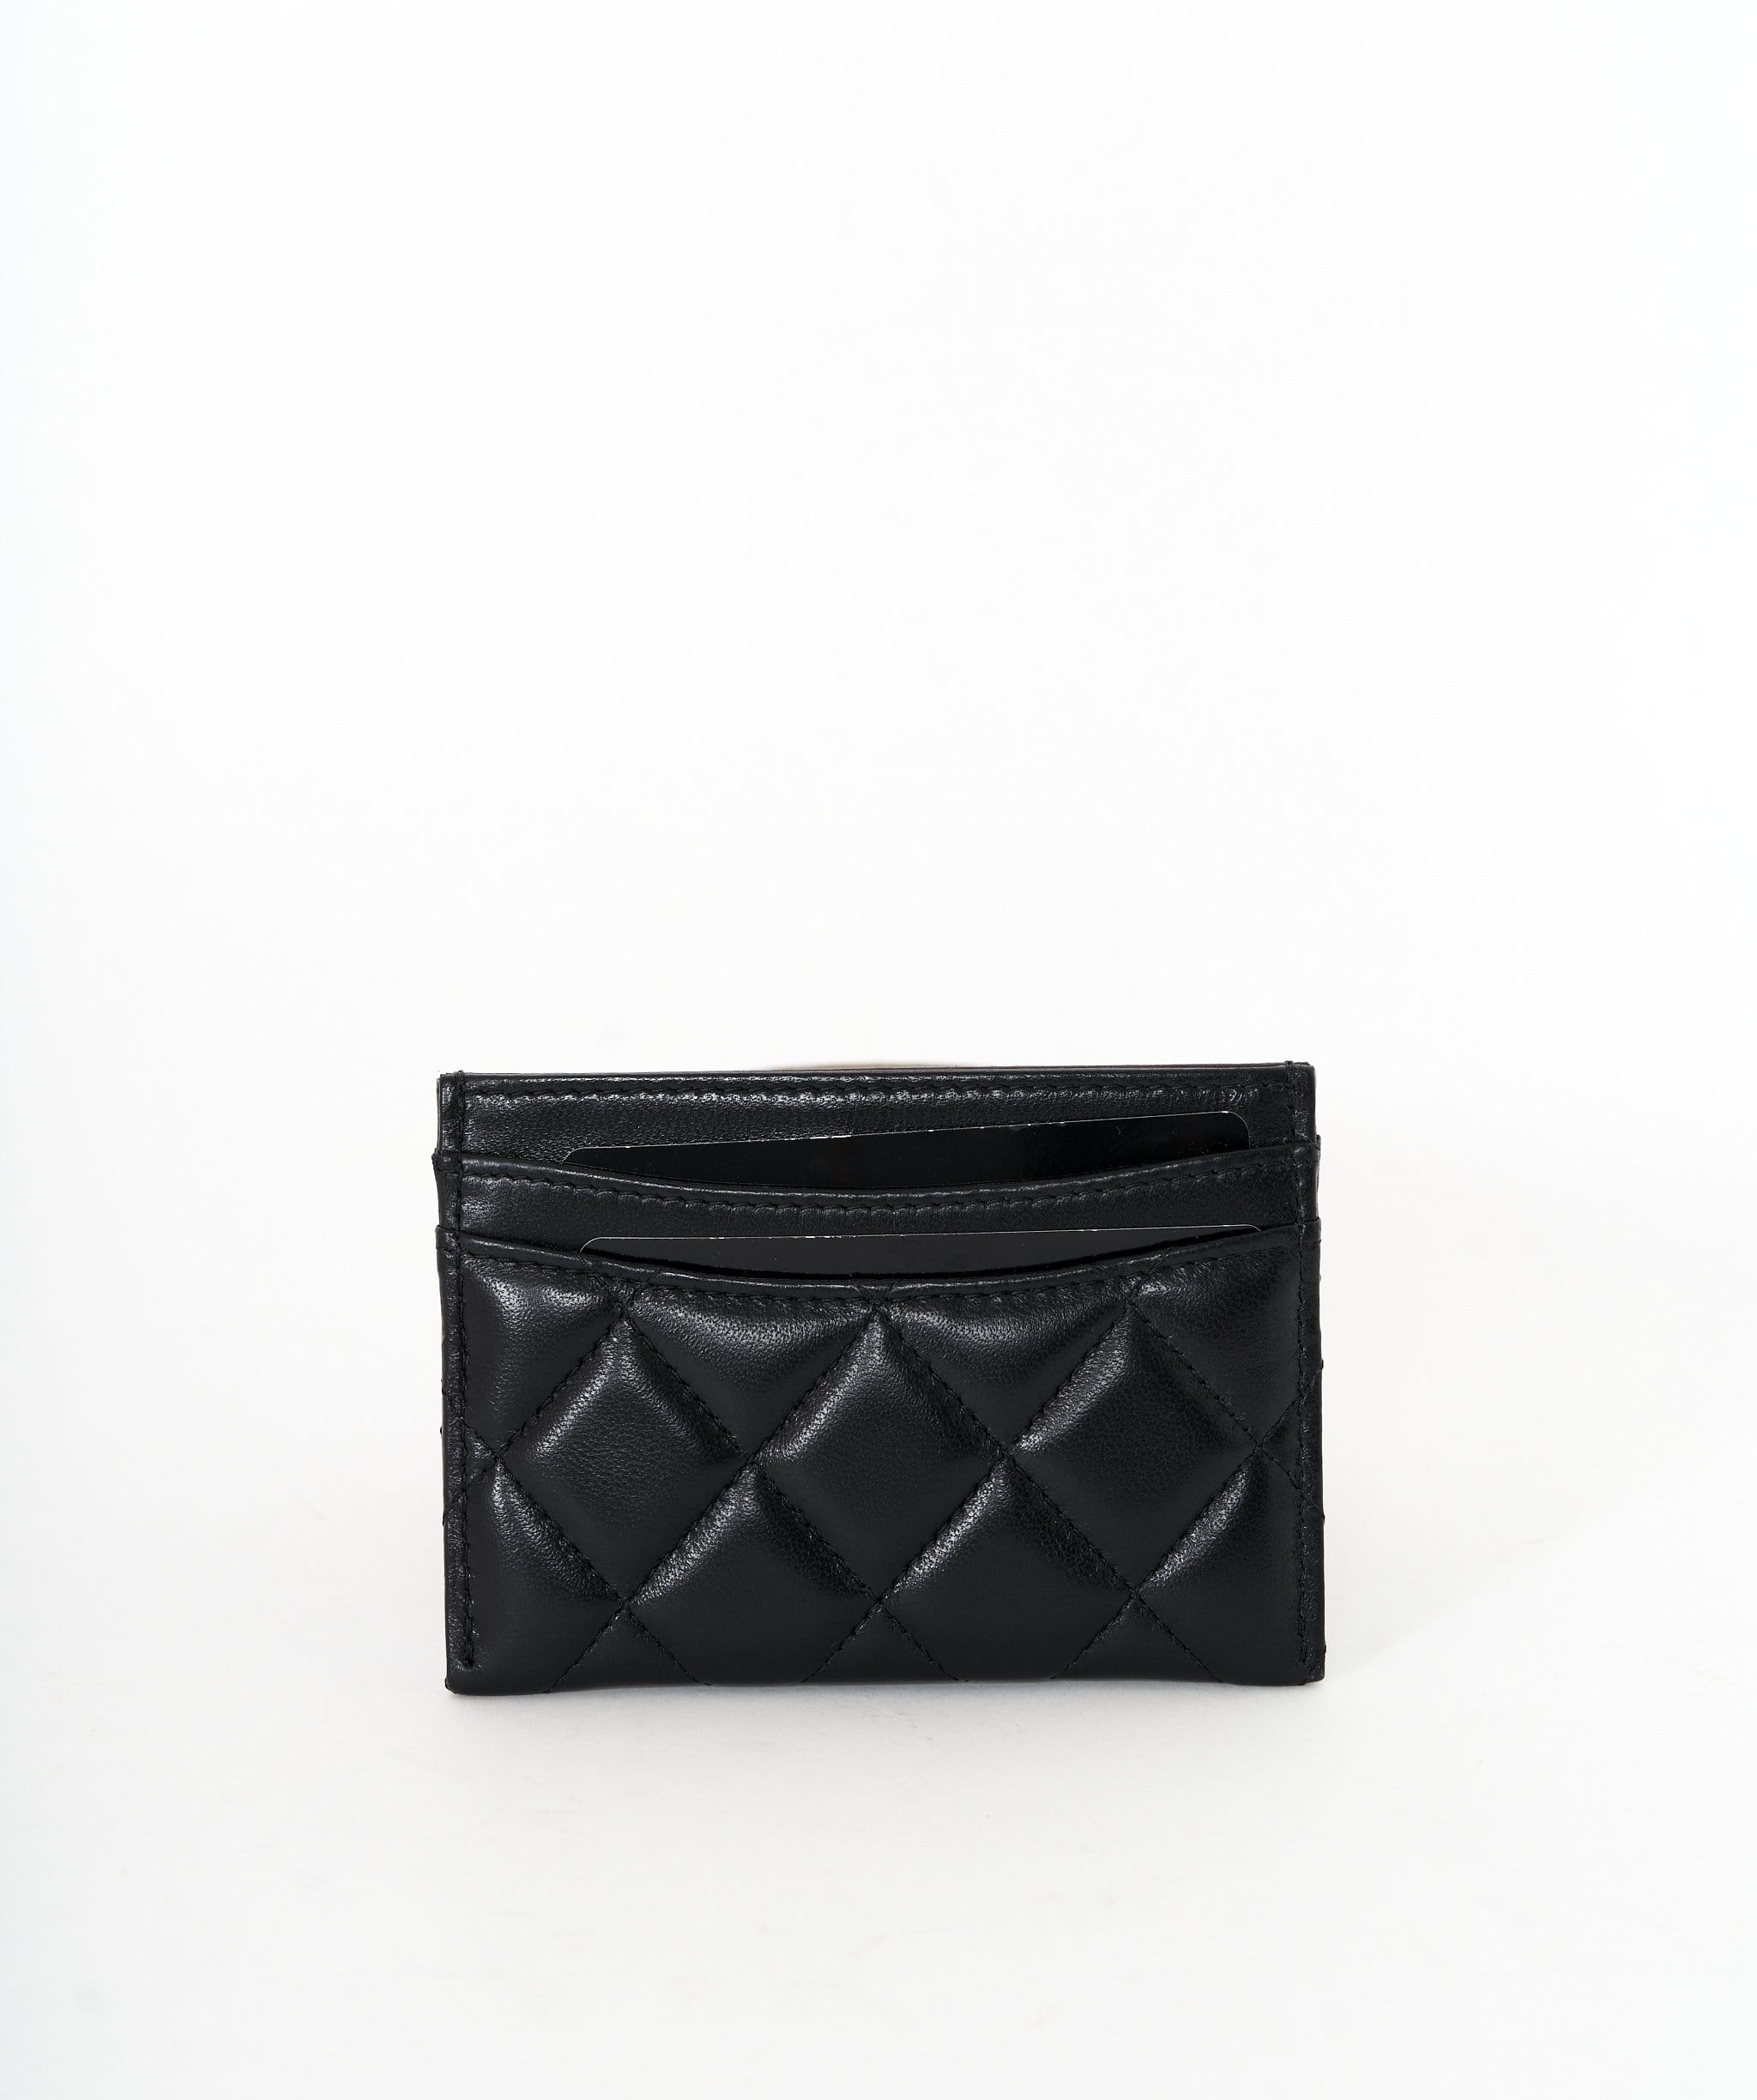 Chanel Chanel Black Lambskin Card Holder